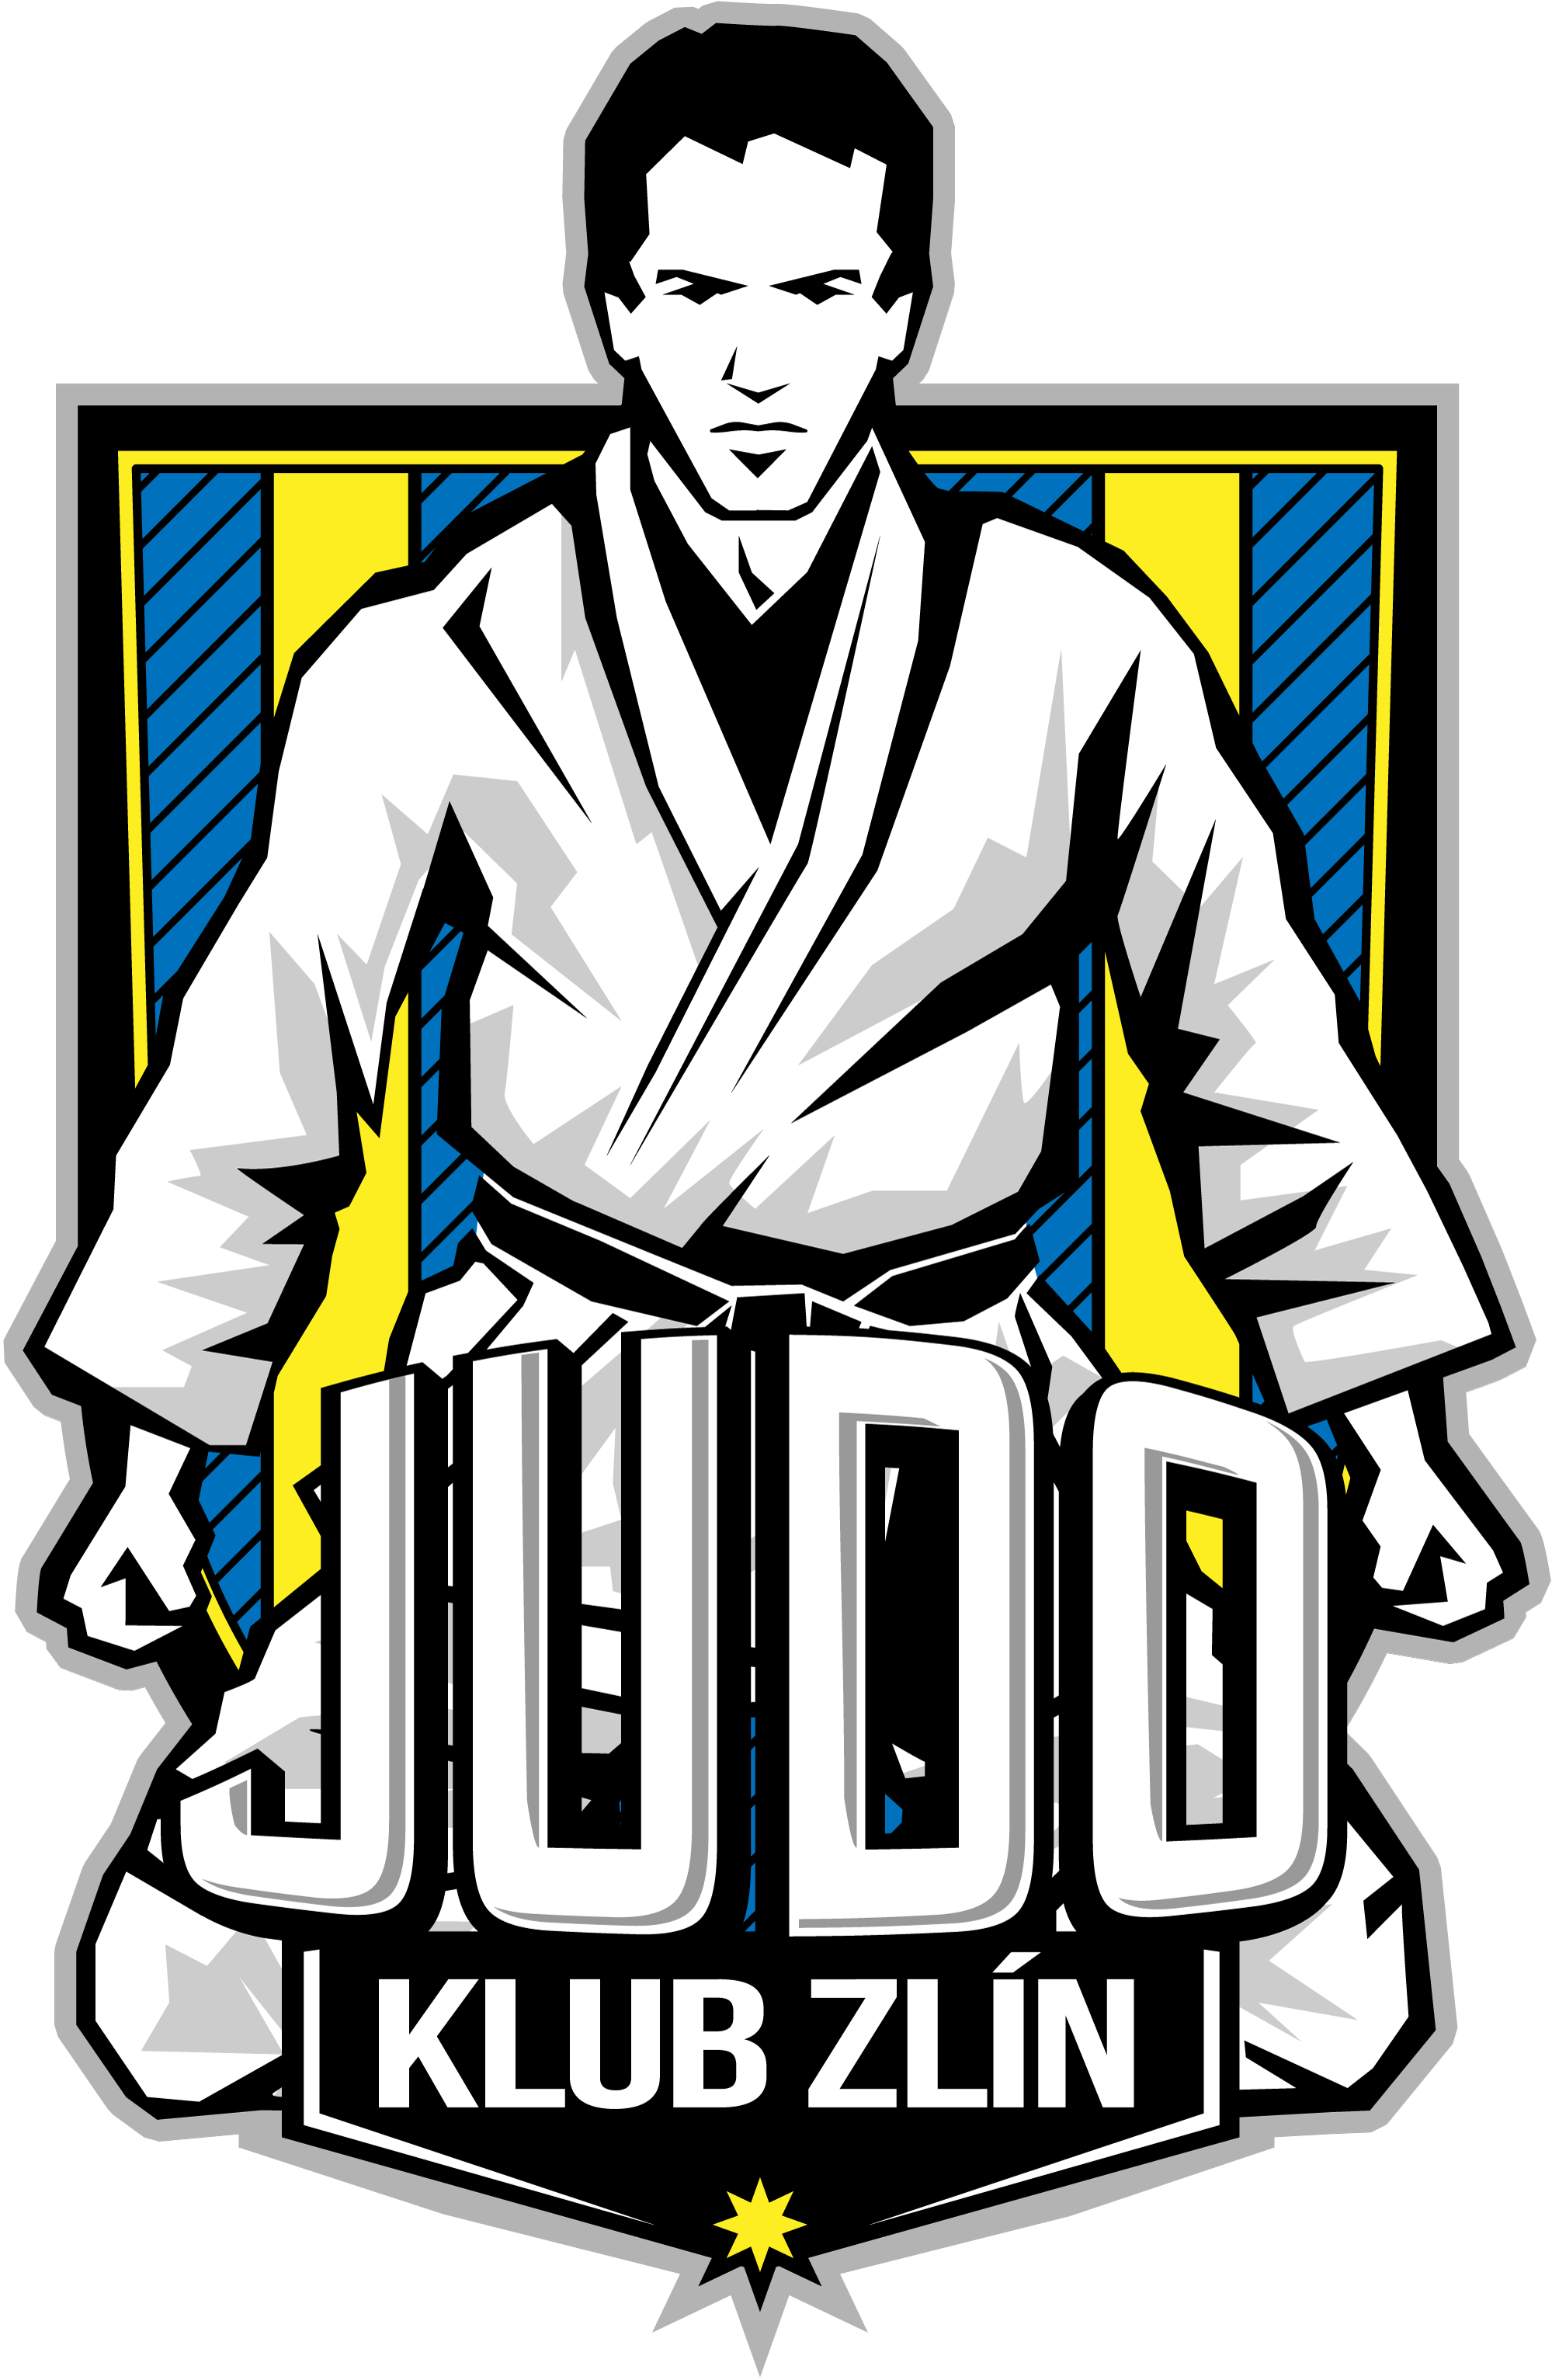 Judo klub Zlín